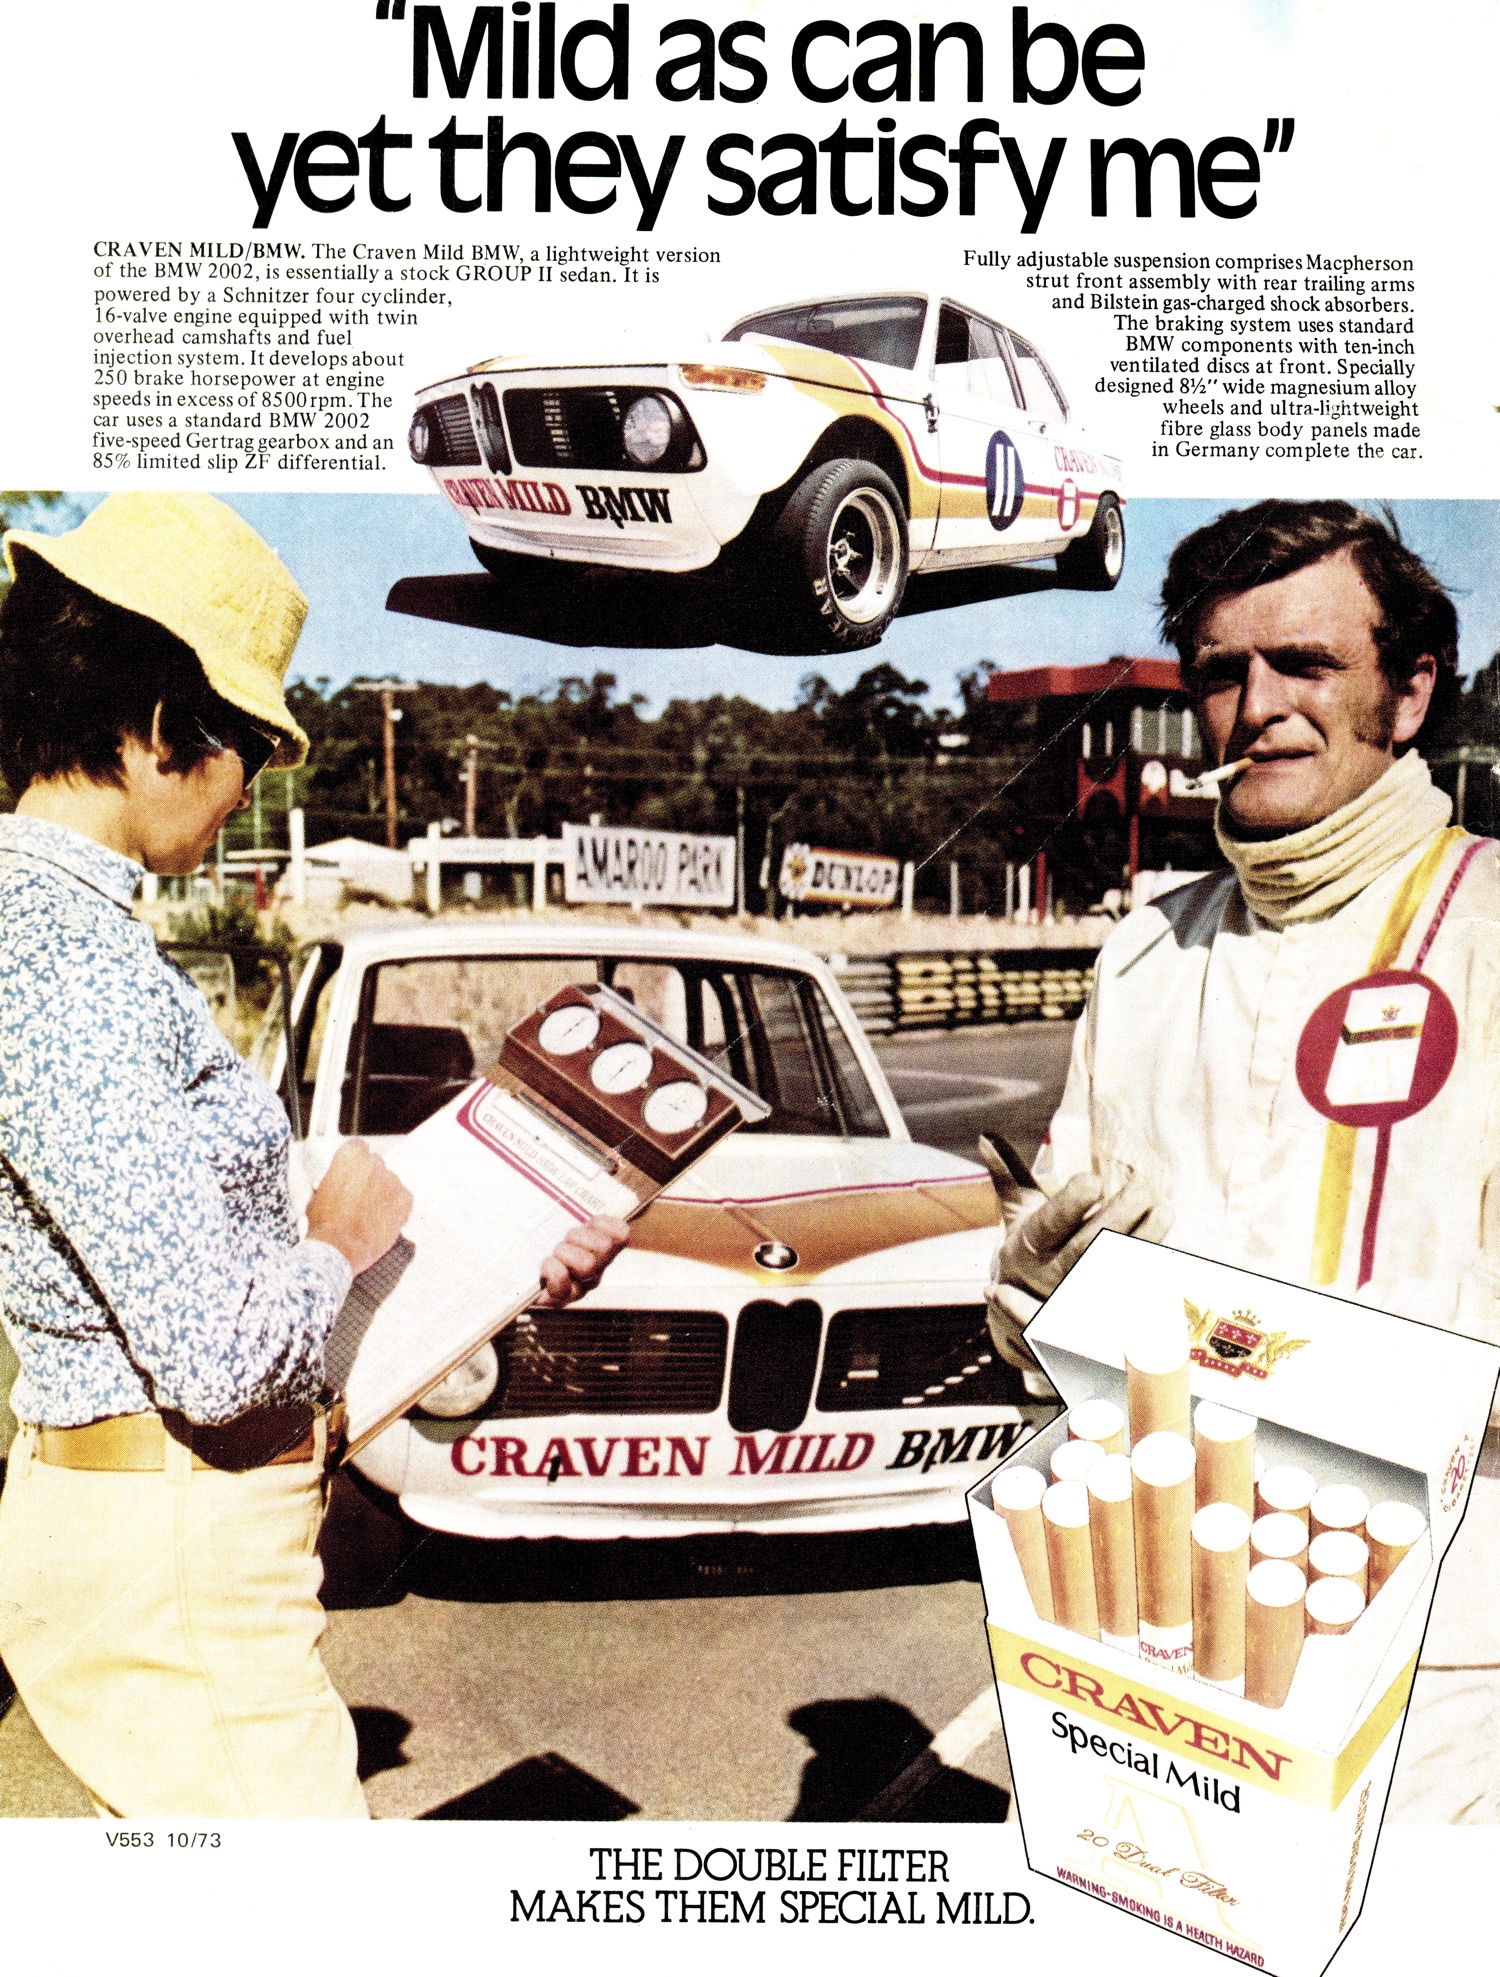 1974 Craven Mild BMW Team